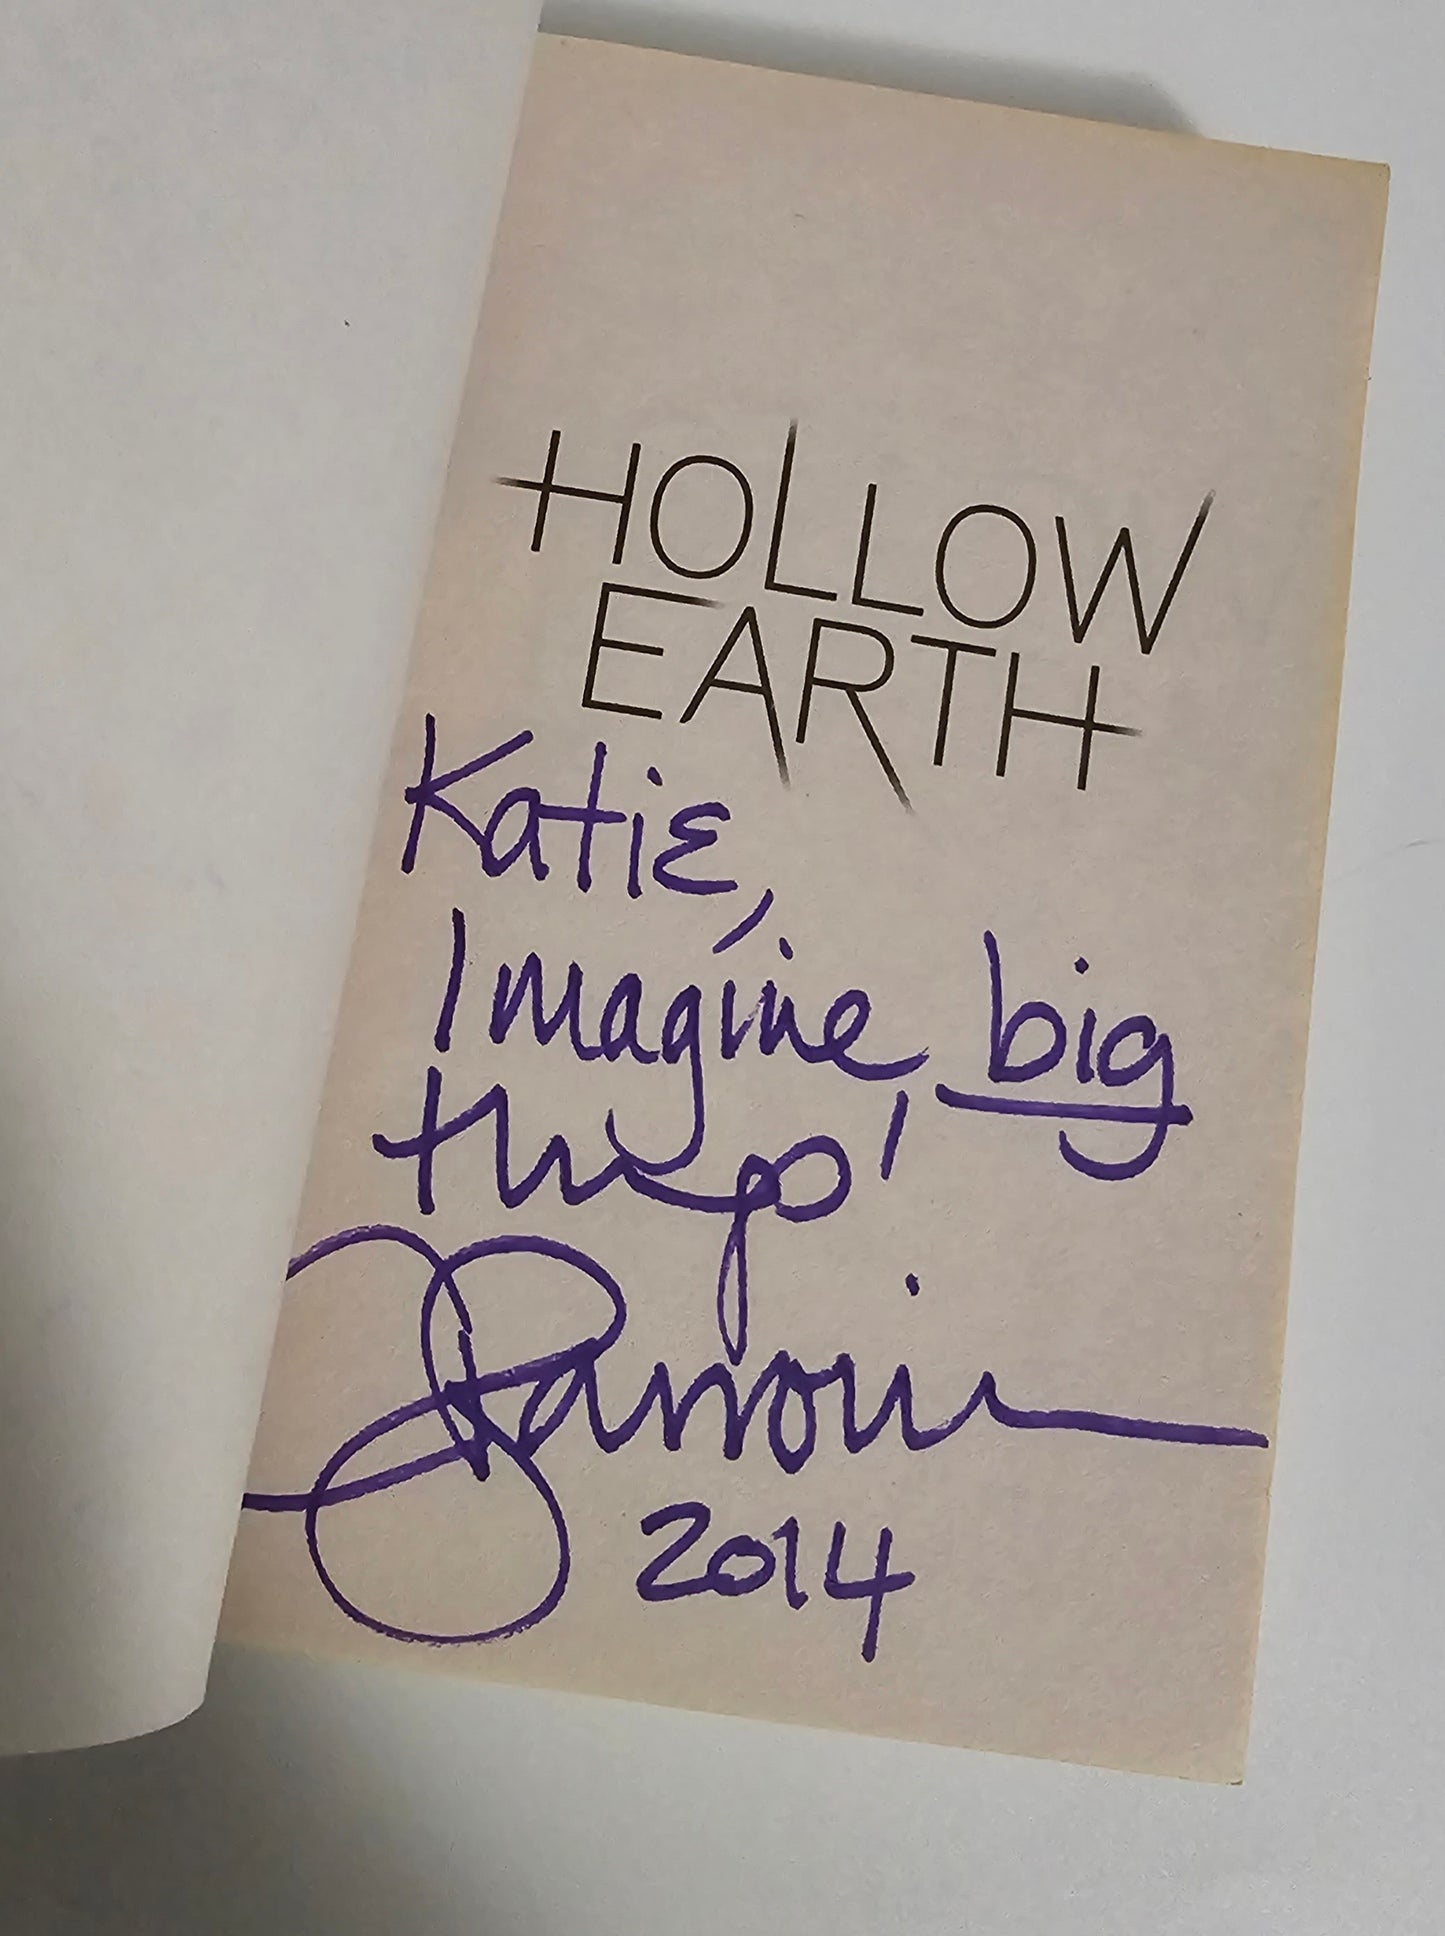 Hollow Earth by John Barrowman & Carole E. Barrowman (Hollow Earth Series #1) - Signed Copy